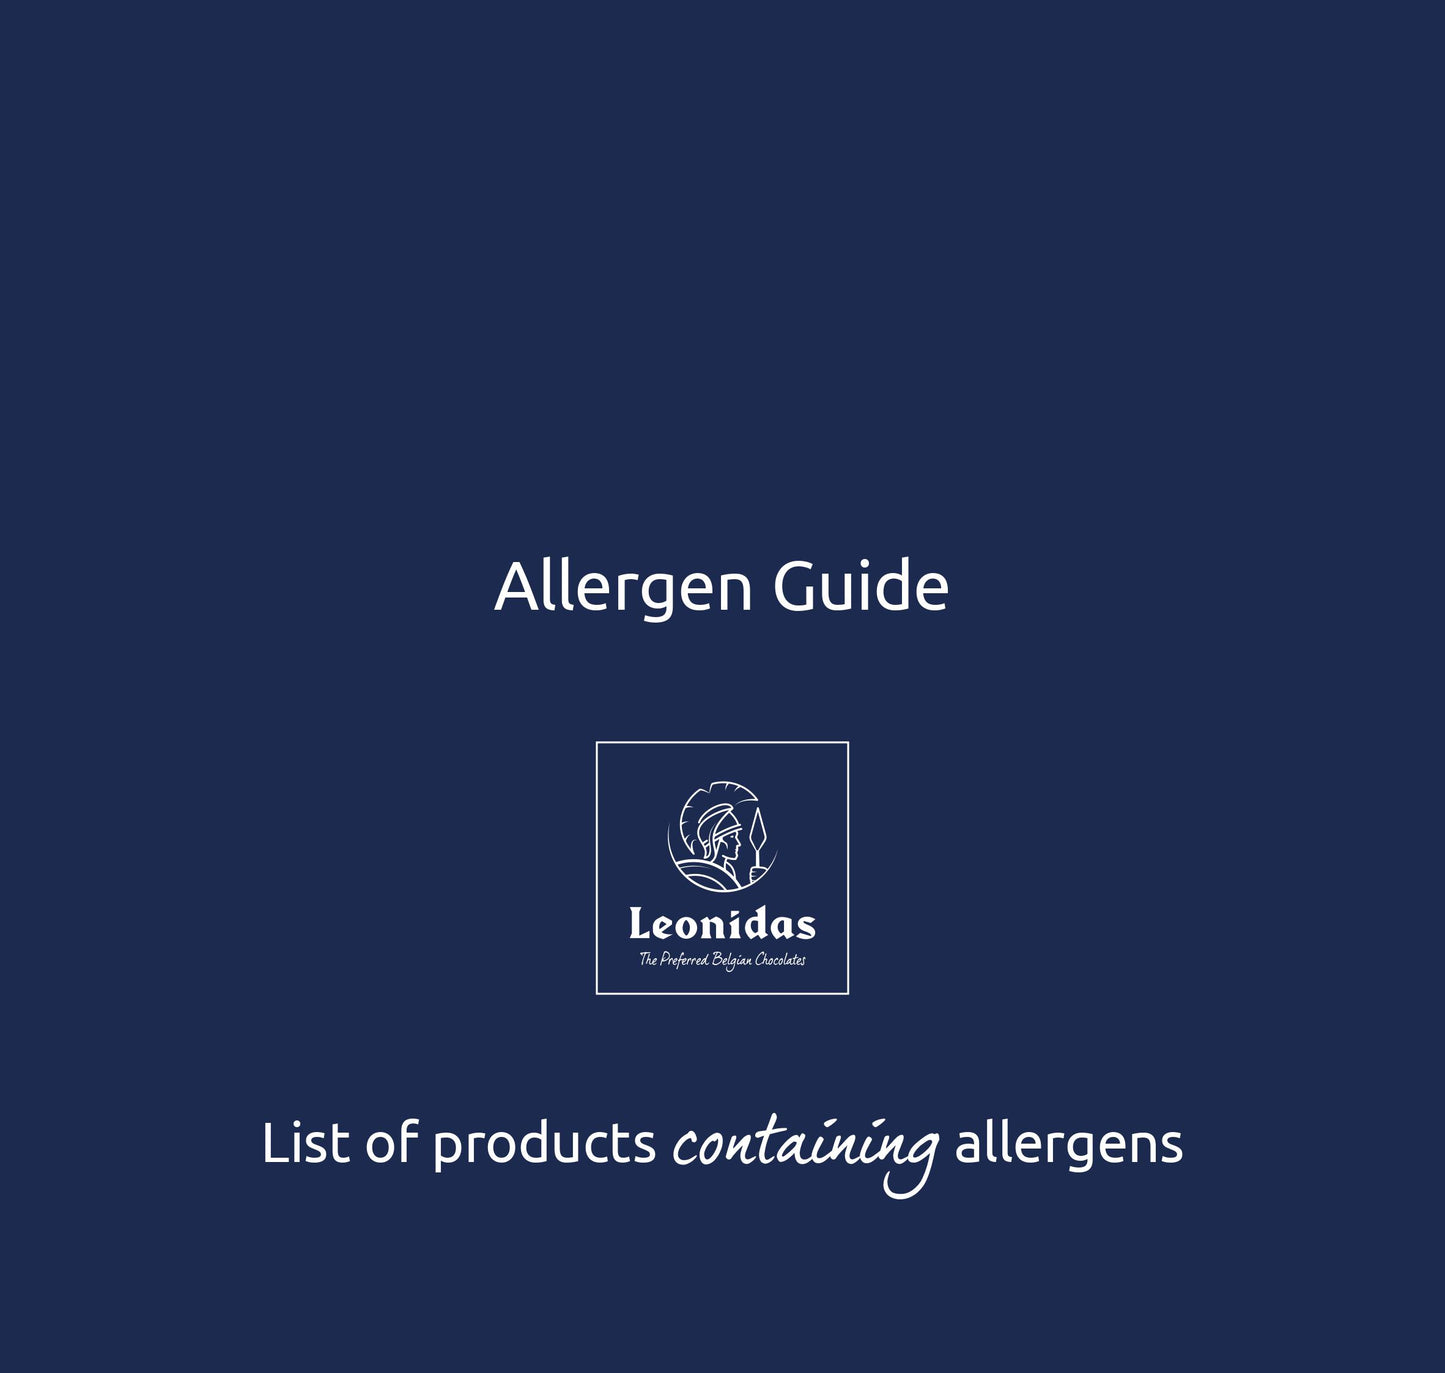 Allergen Guide Classic Range